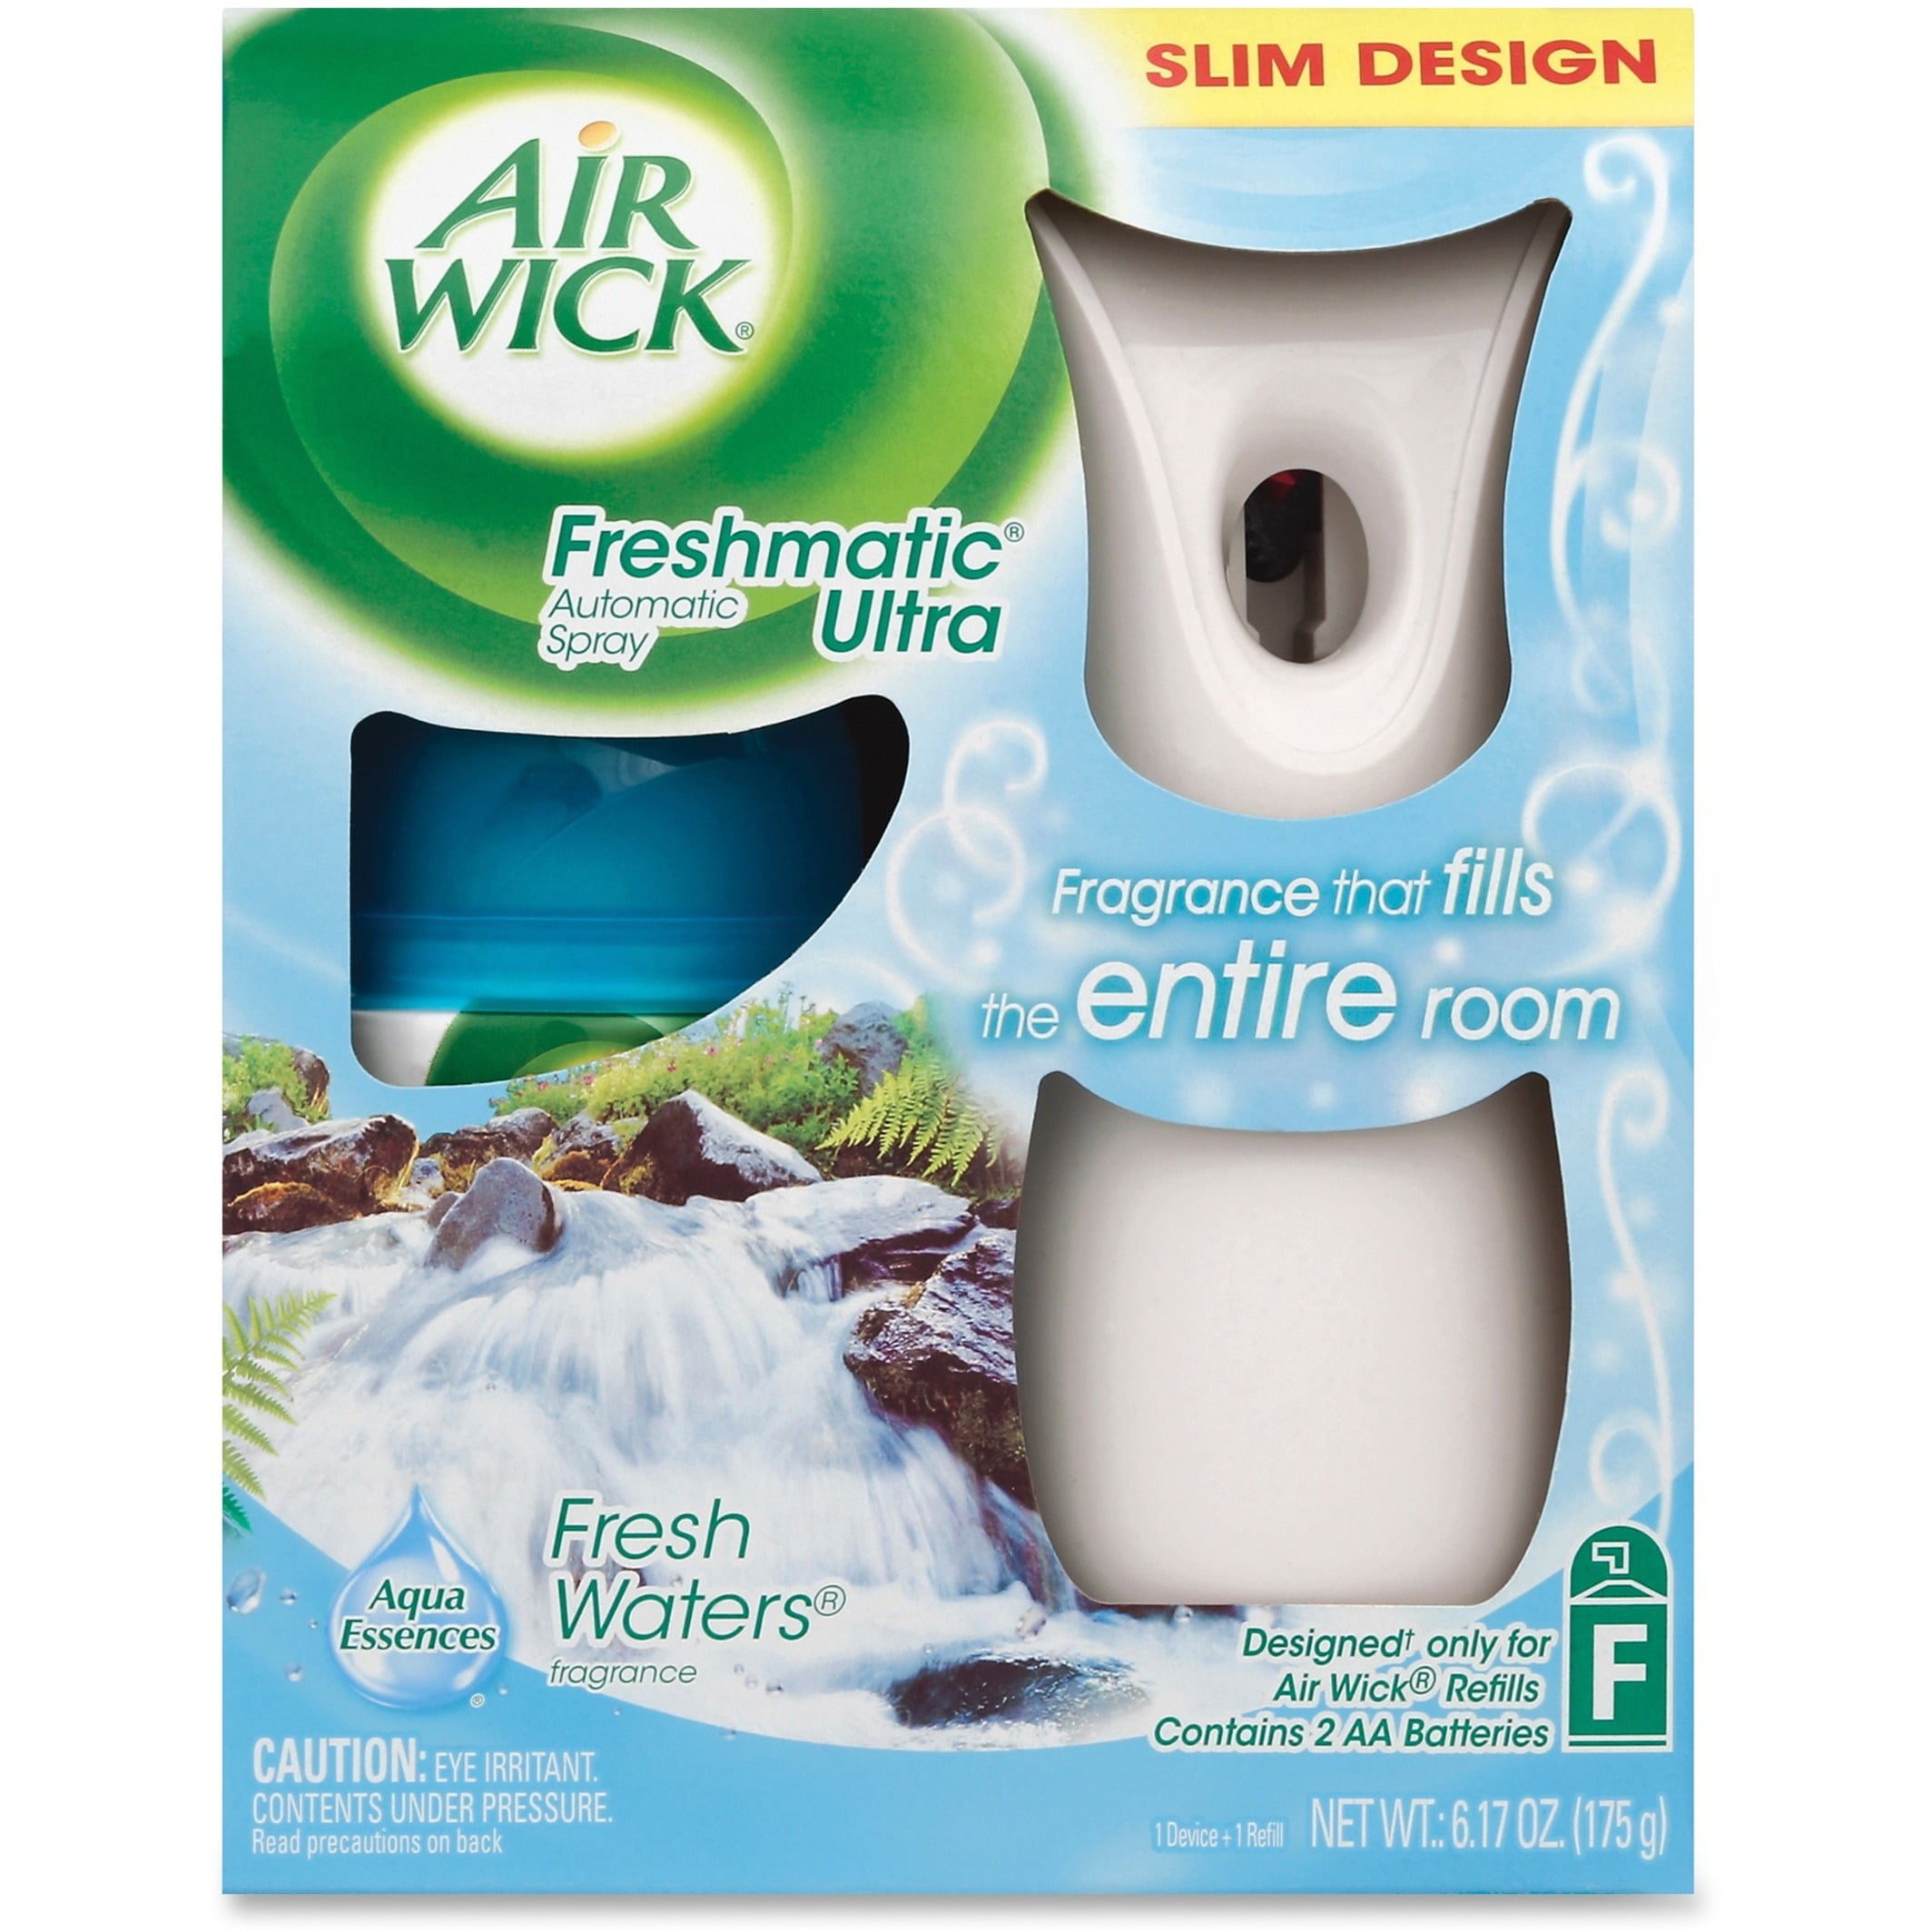 Air Wick Freshmatic Automatic Spray Kit Dispenser